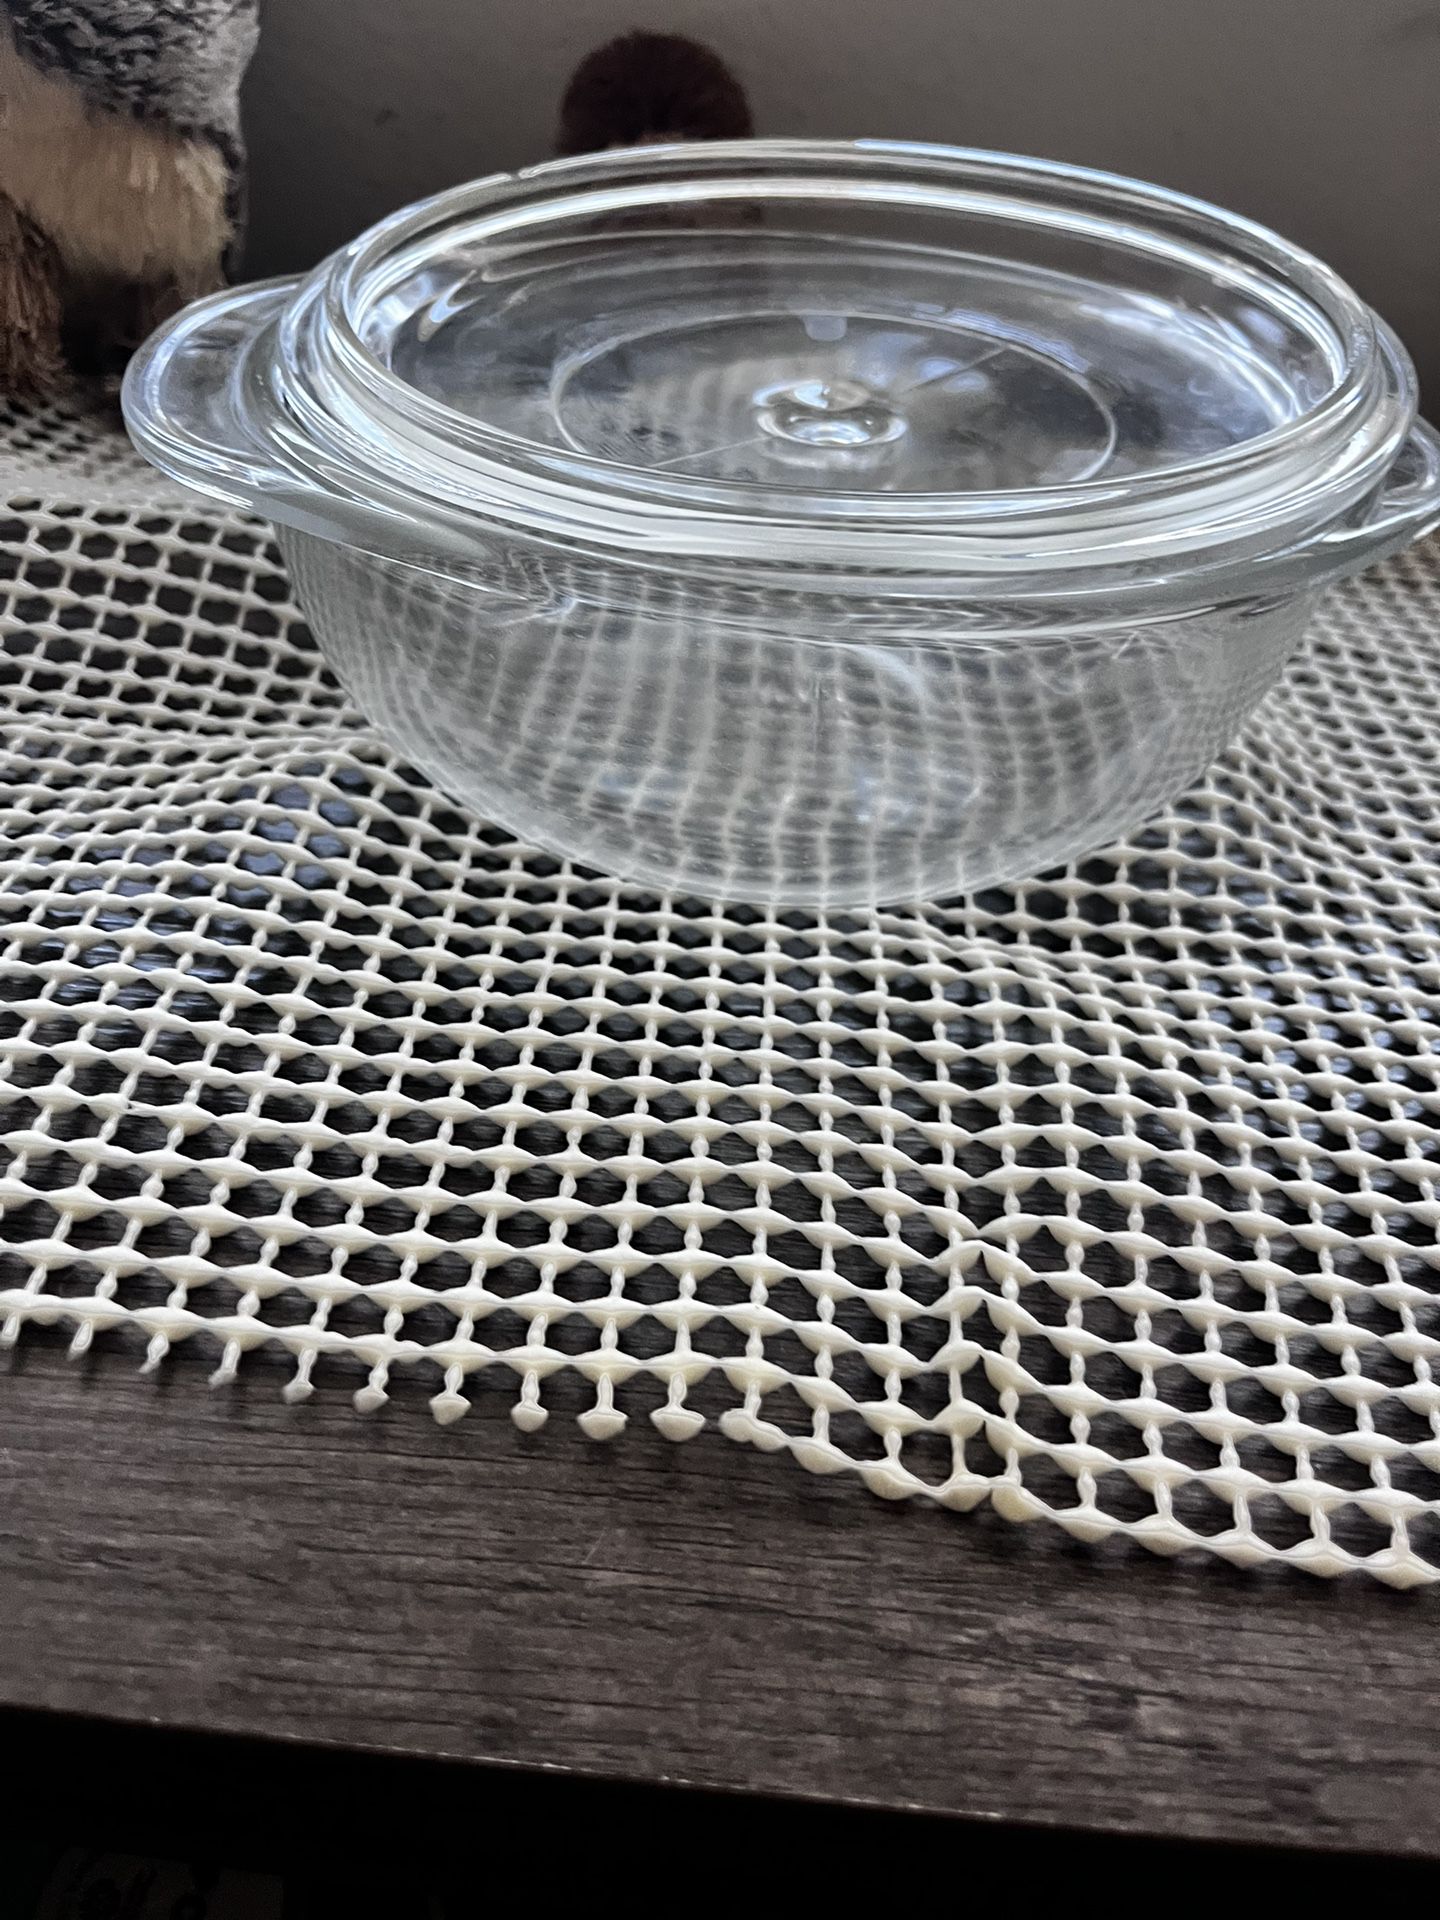 1 Quart Glass Pyrex Casserole With Lid